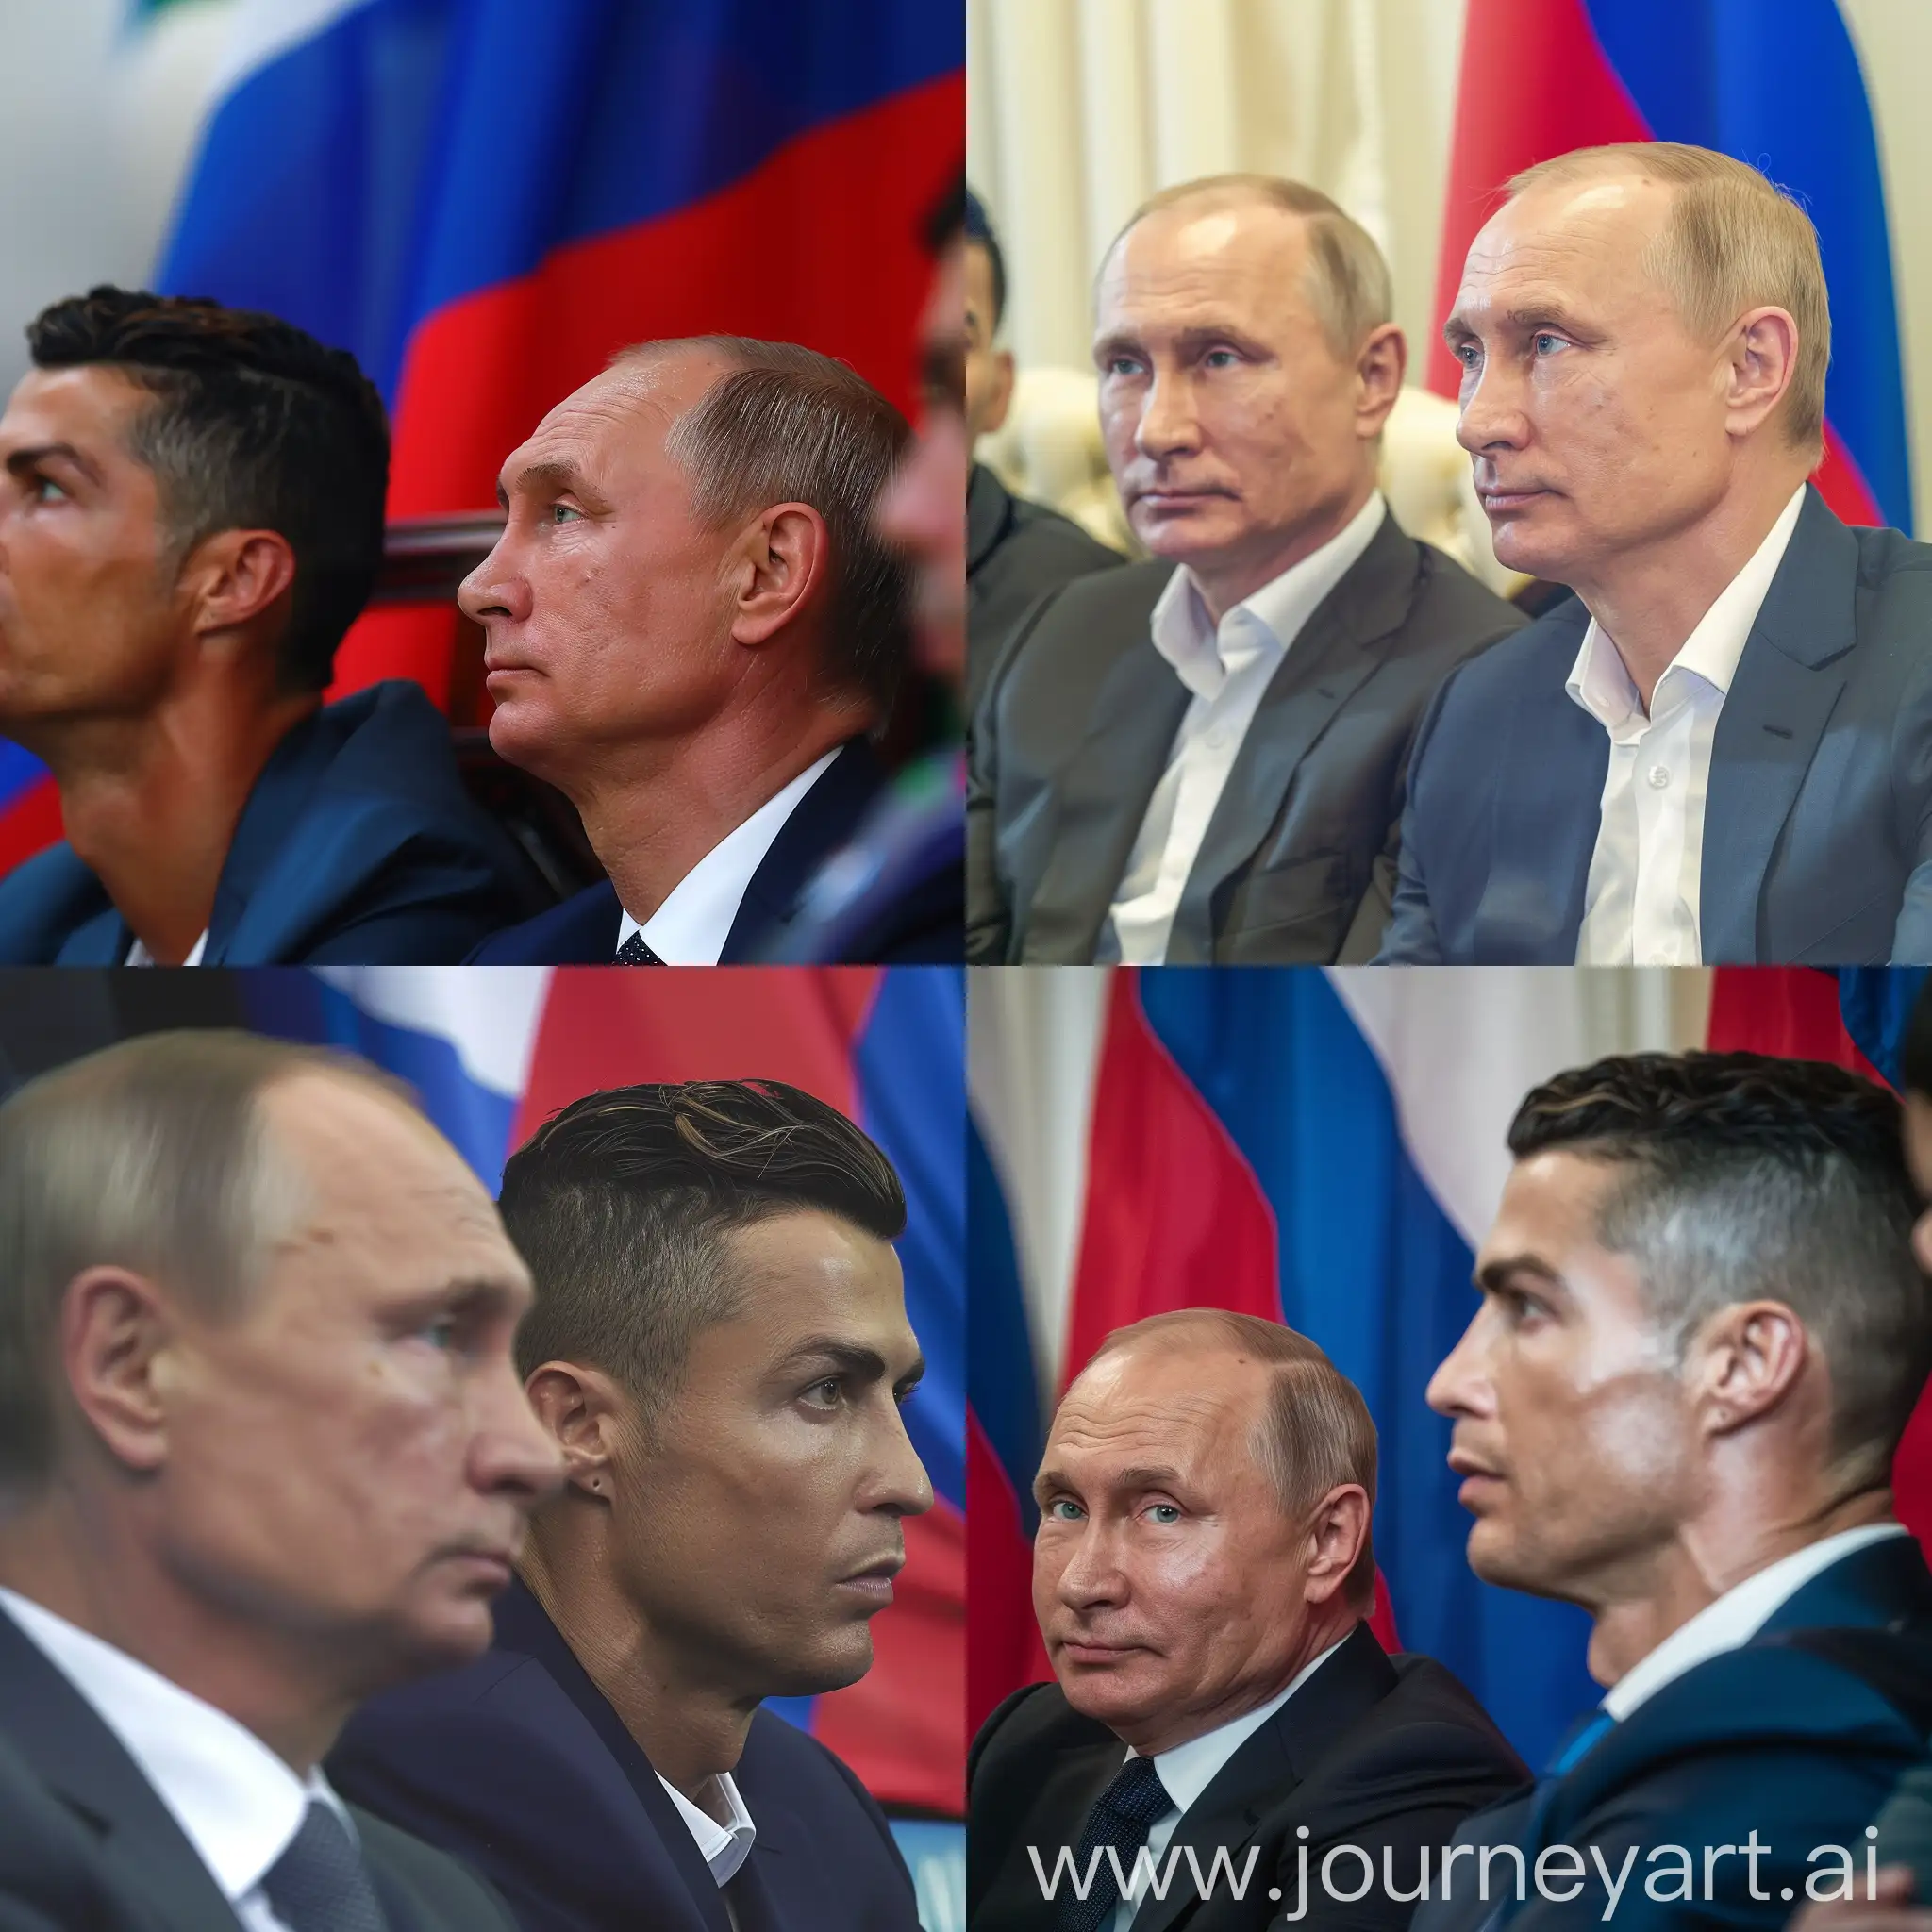 Vladimir-Putin-and-Cristiano-Ronaldo-CloseUp-Portrait-with-Russian-Flag-Background